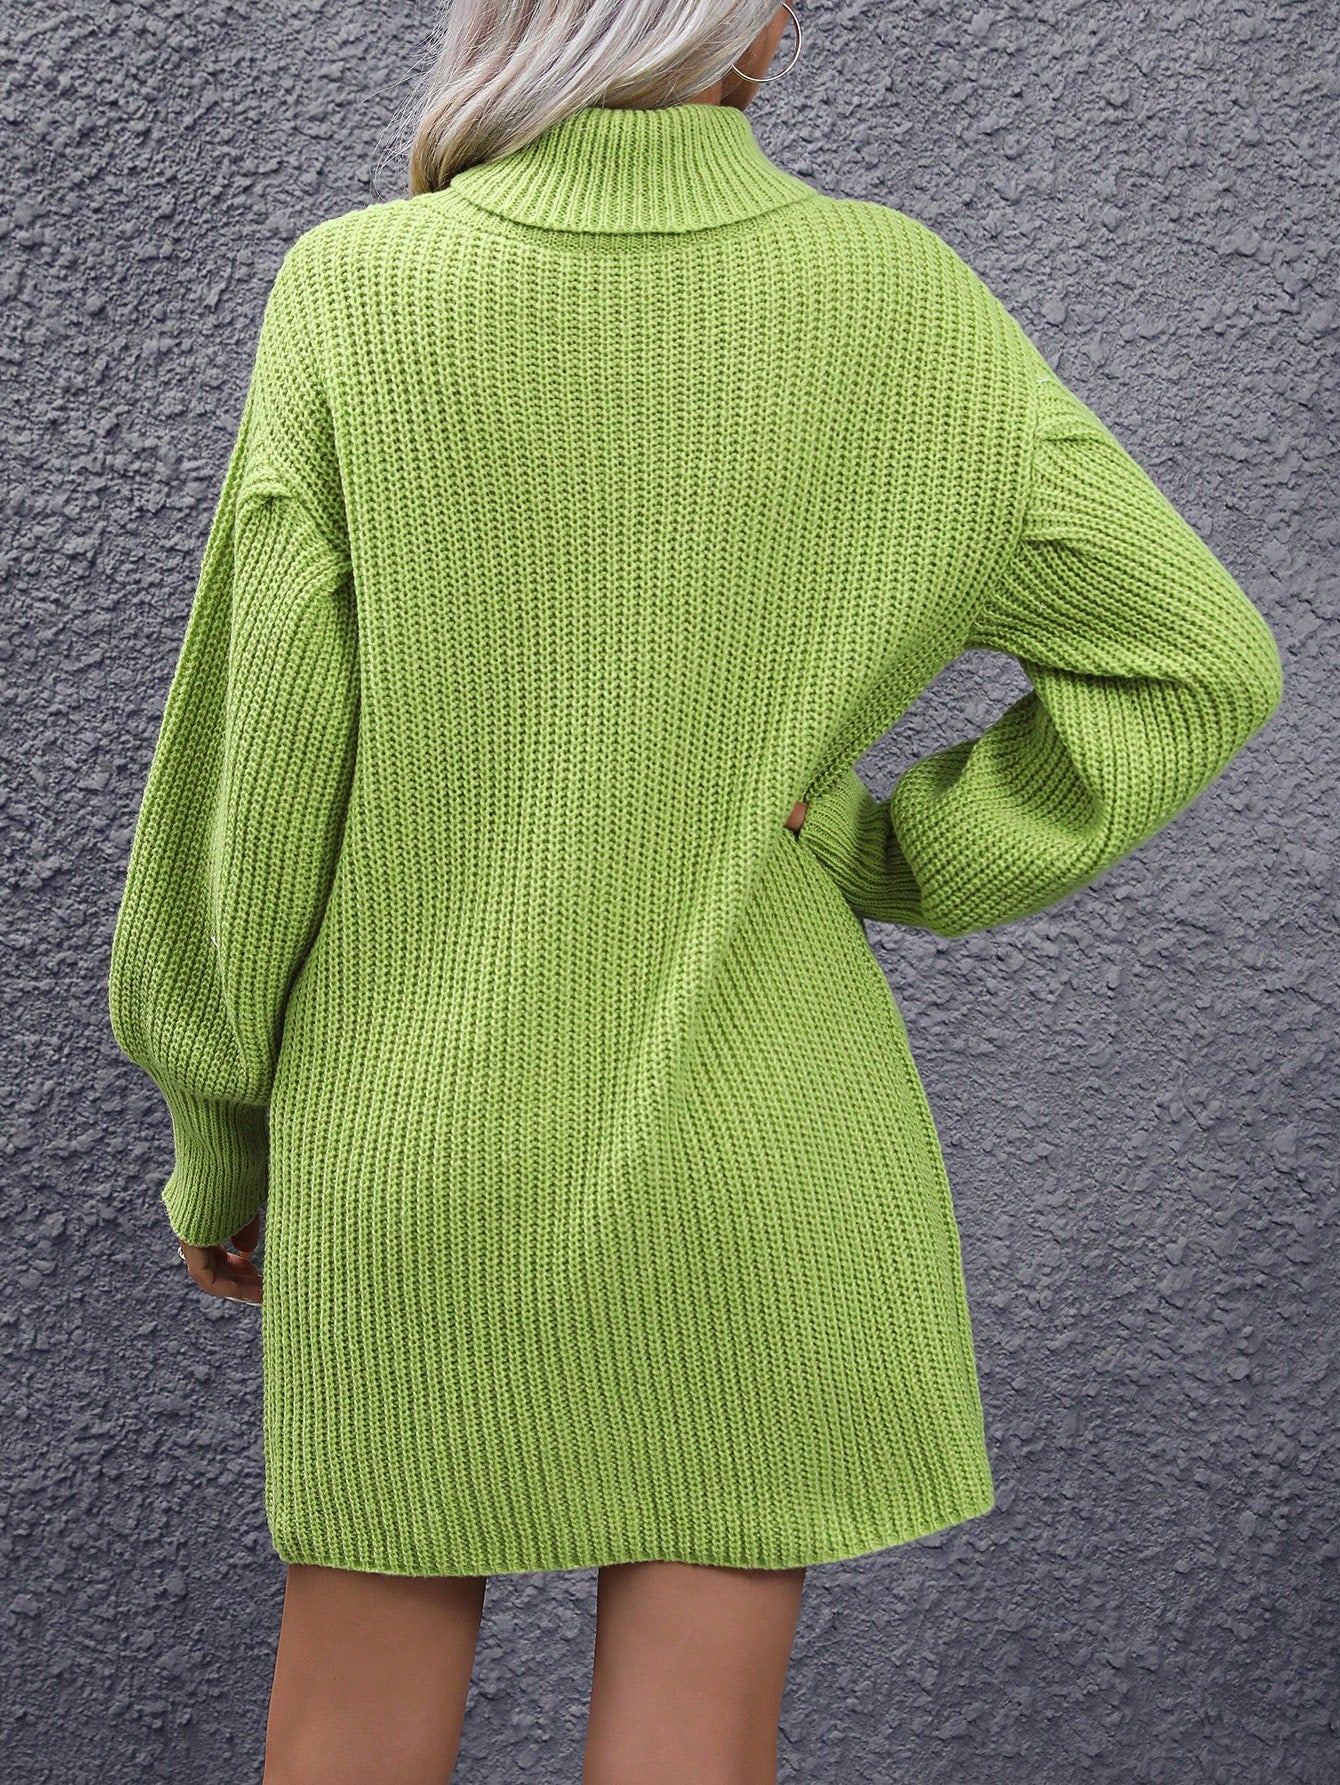 Women's Drop Shoulder Long Sleeve Turtleneck Sweater Dress